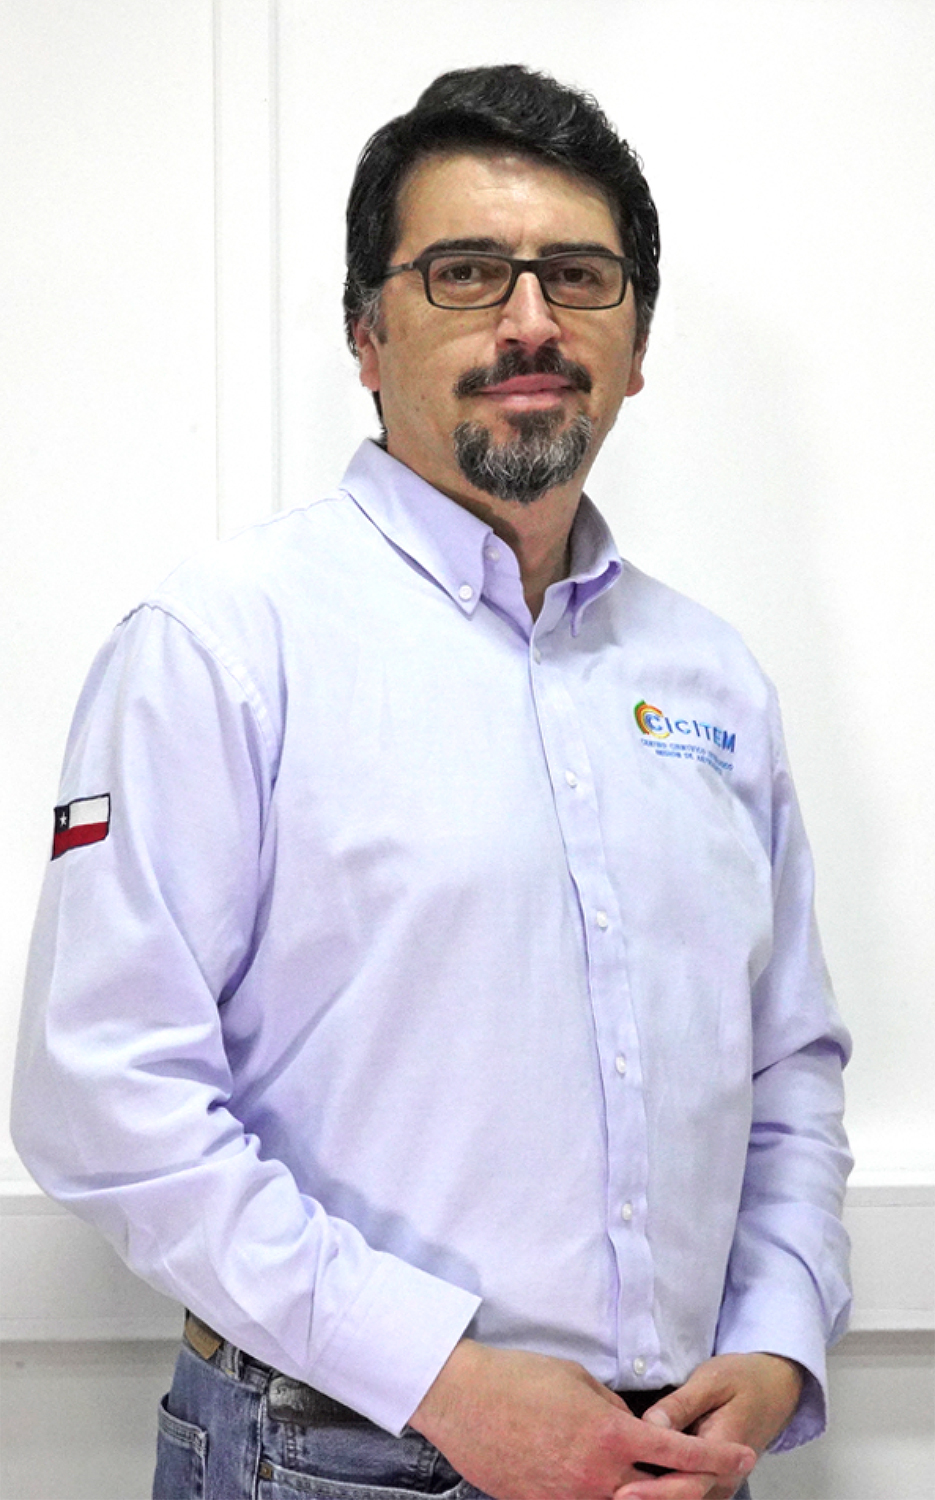 Dr Pablo Rojas